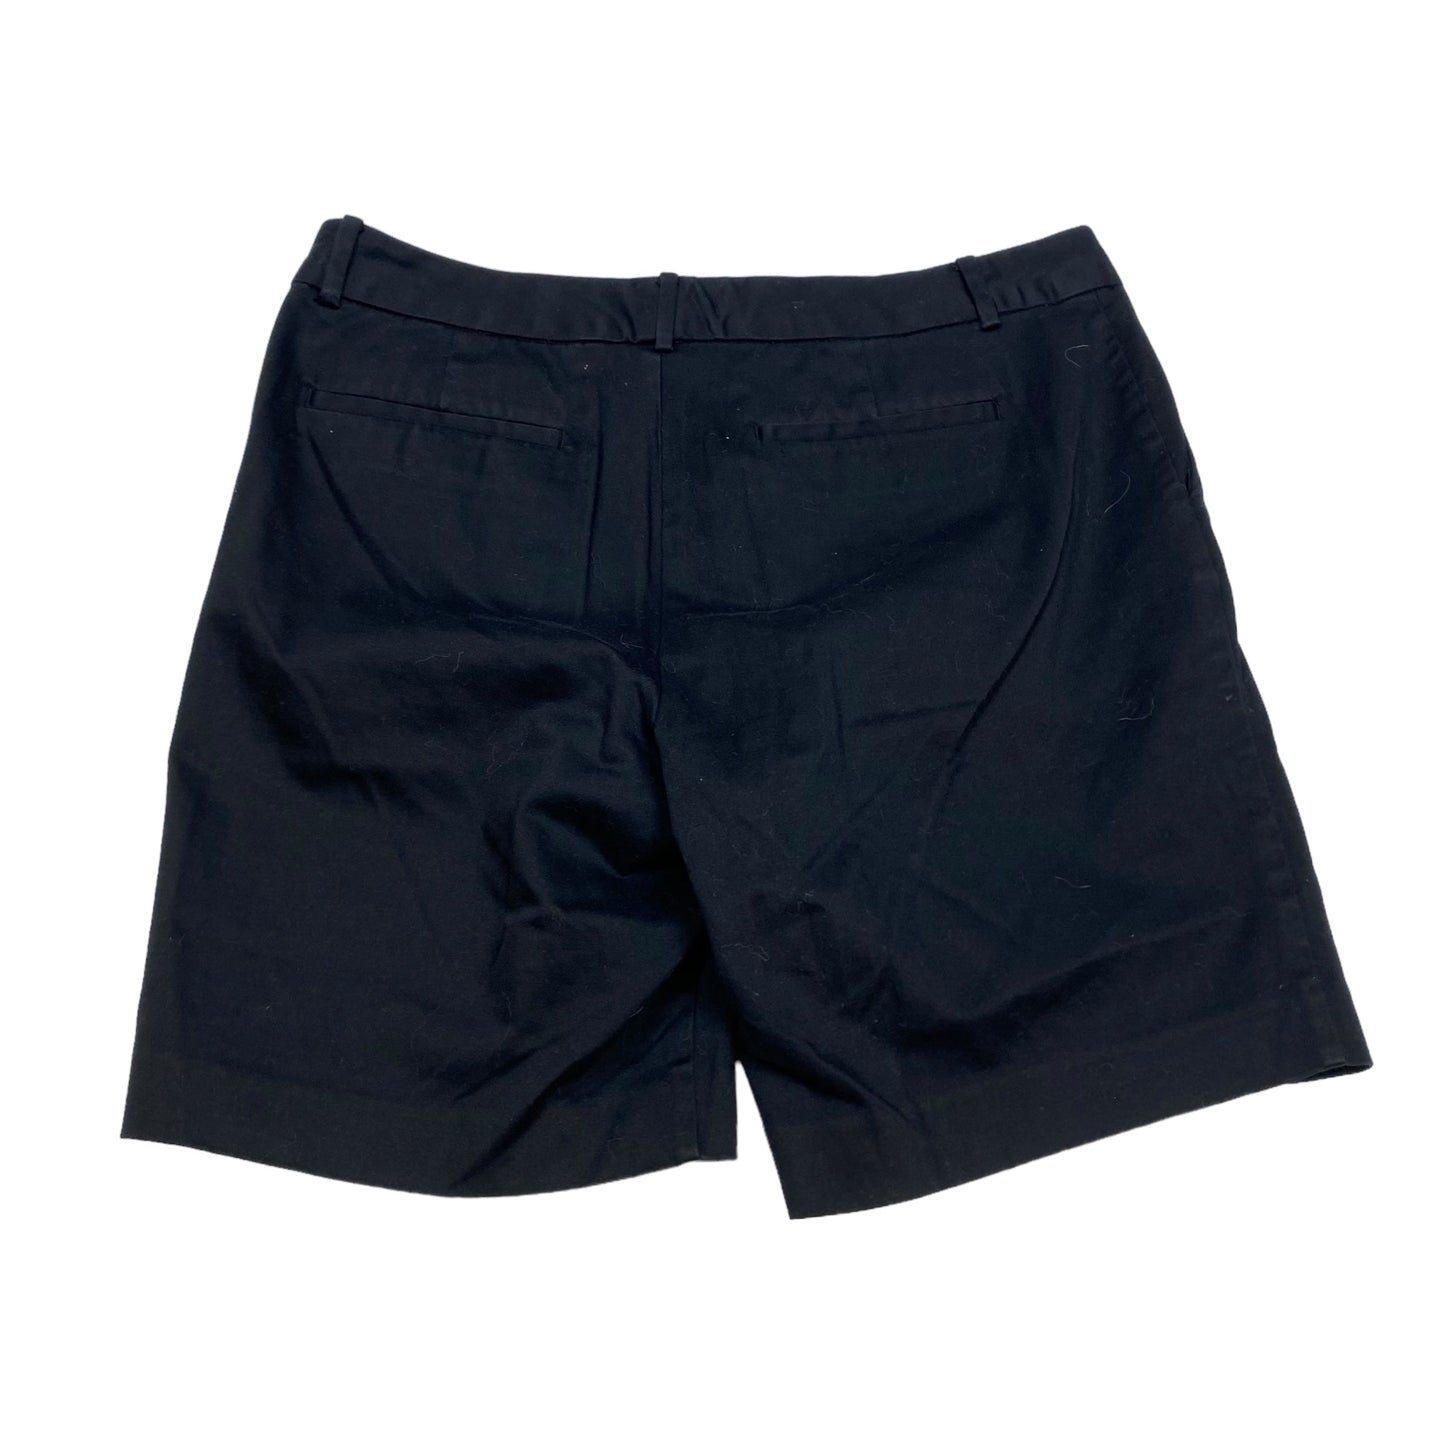 Black Shorts Lauren By Ralph Lauren, Size 14